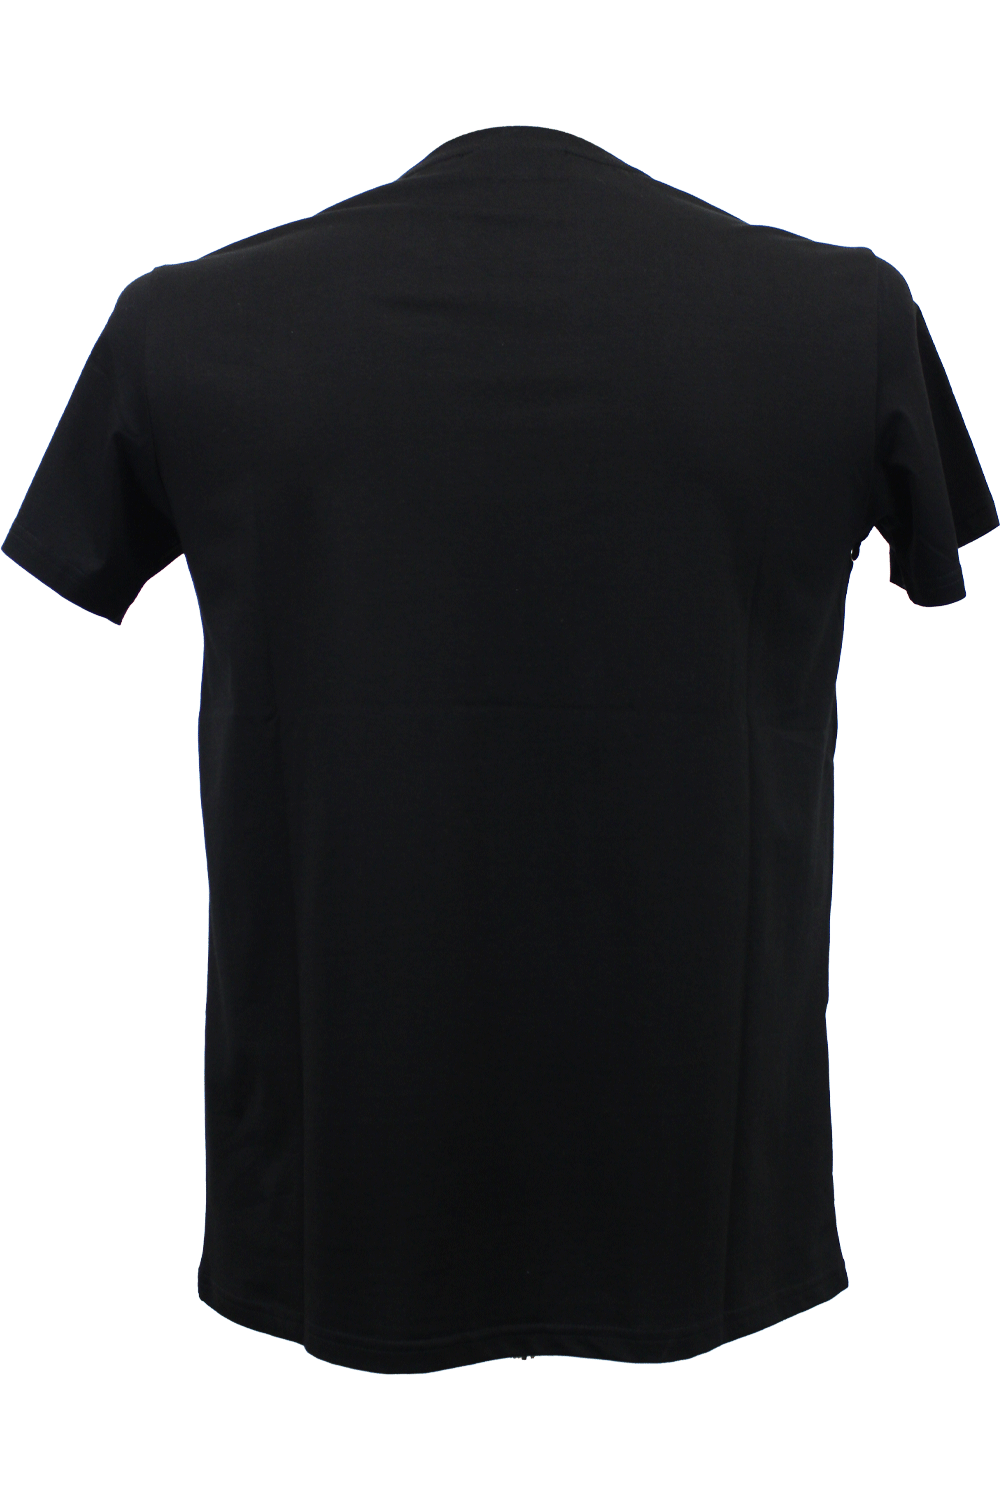 Vialli LALLA Black T-Shirt